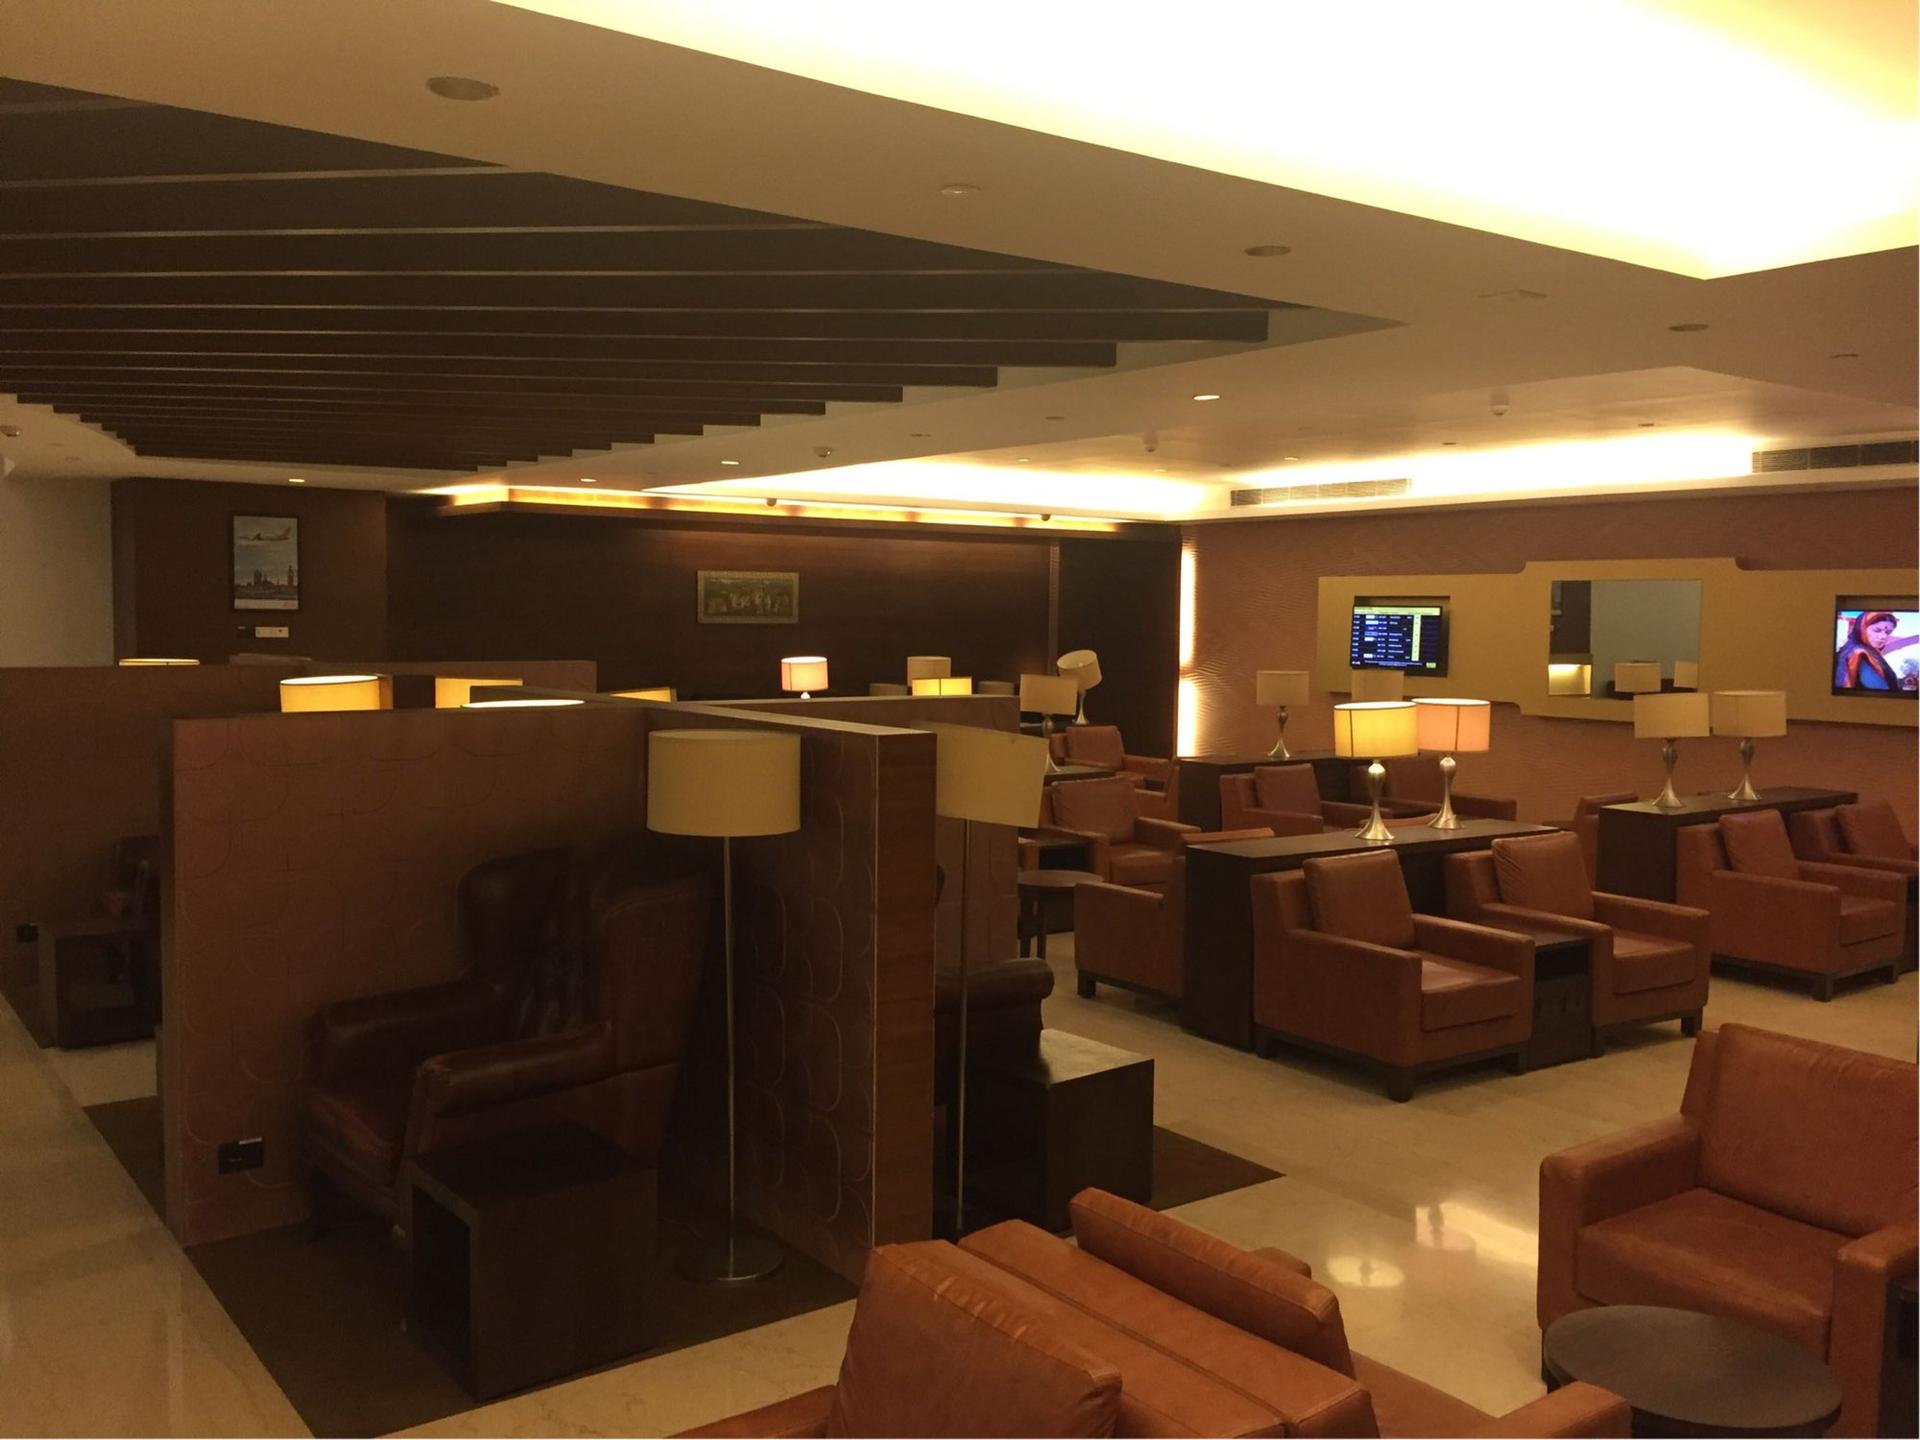 Air India Maharajah Lounge  image 1 of 15